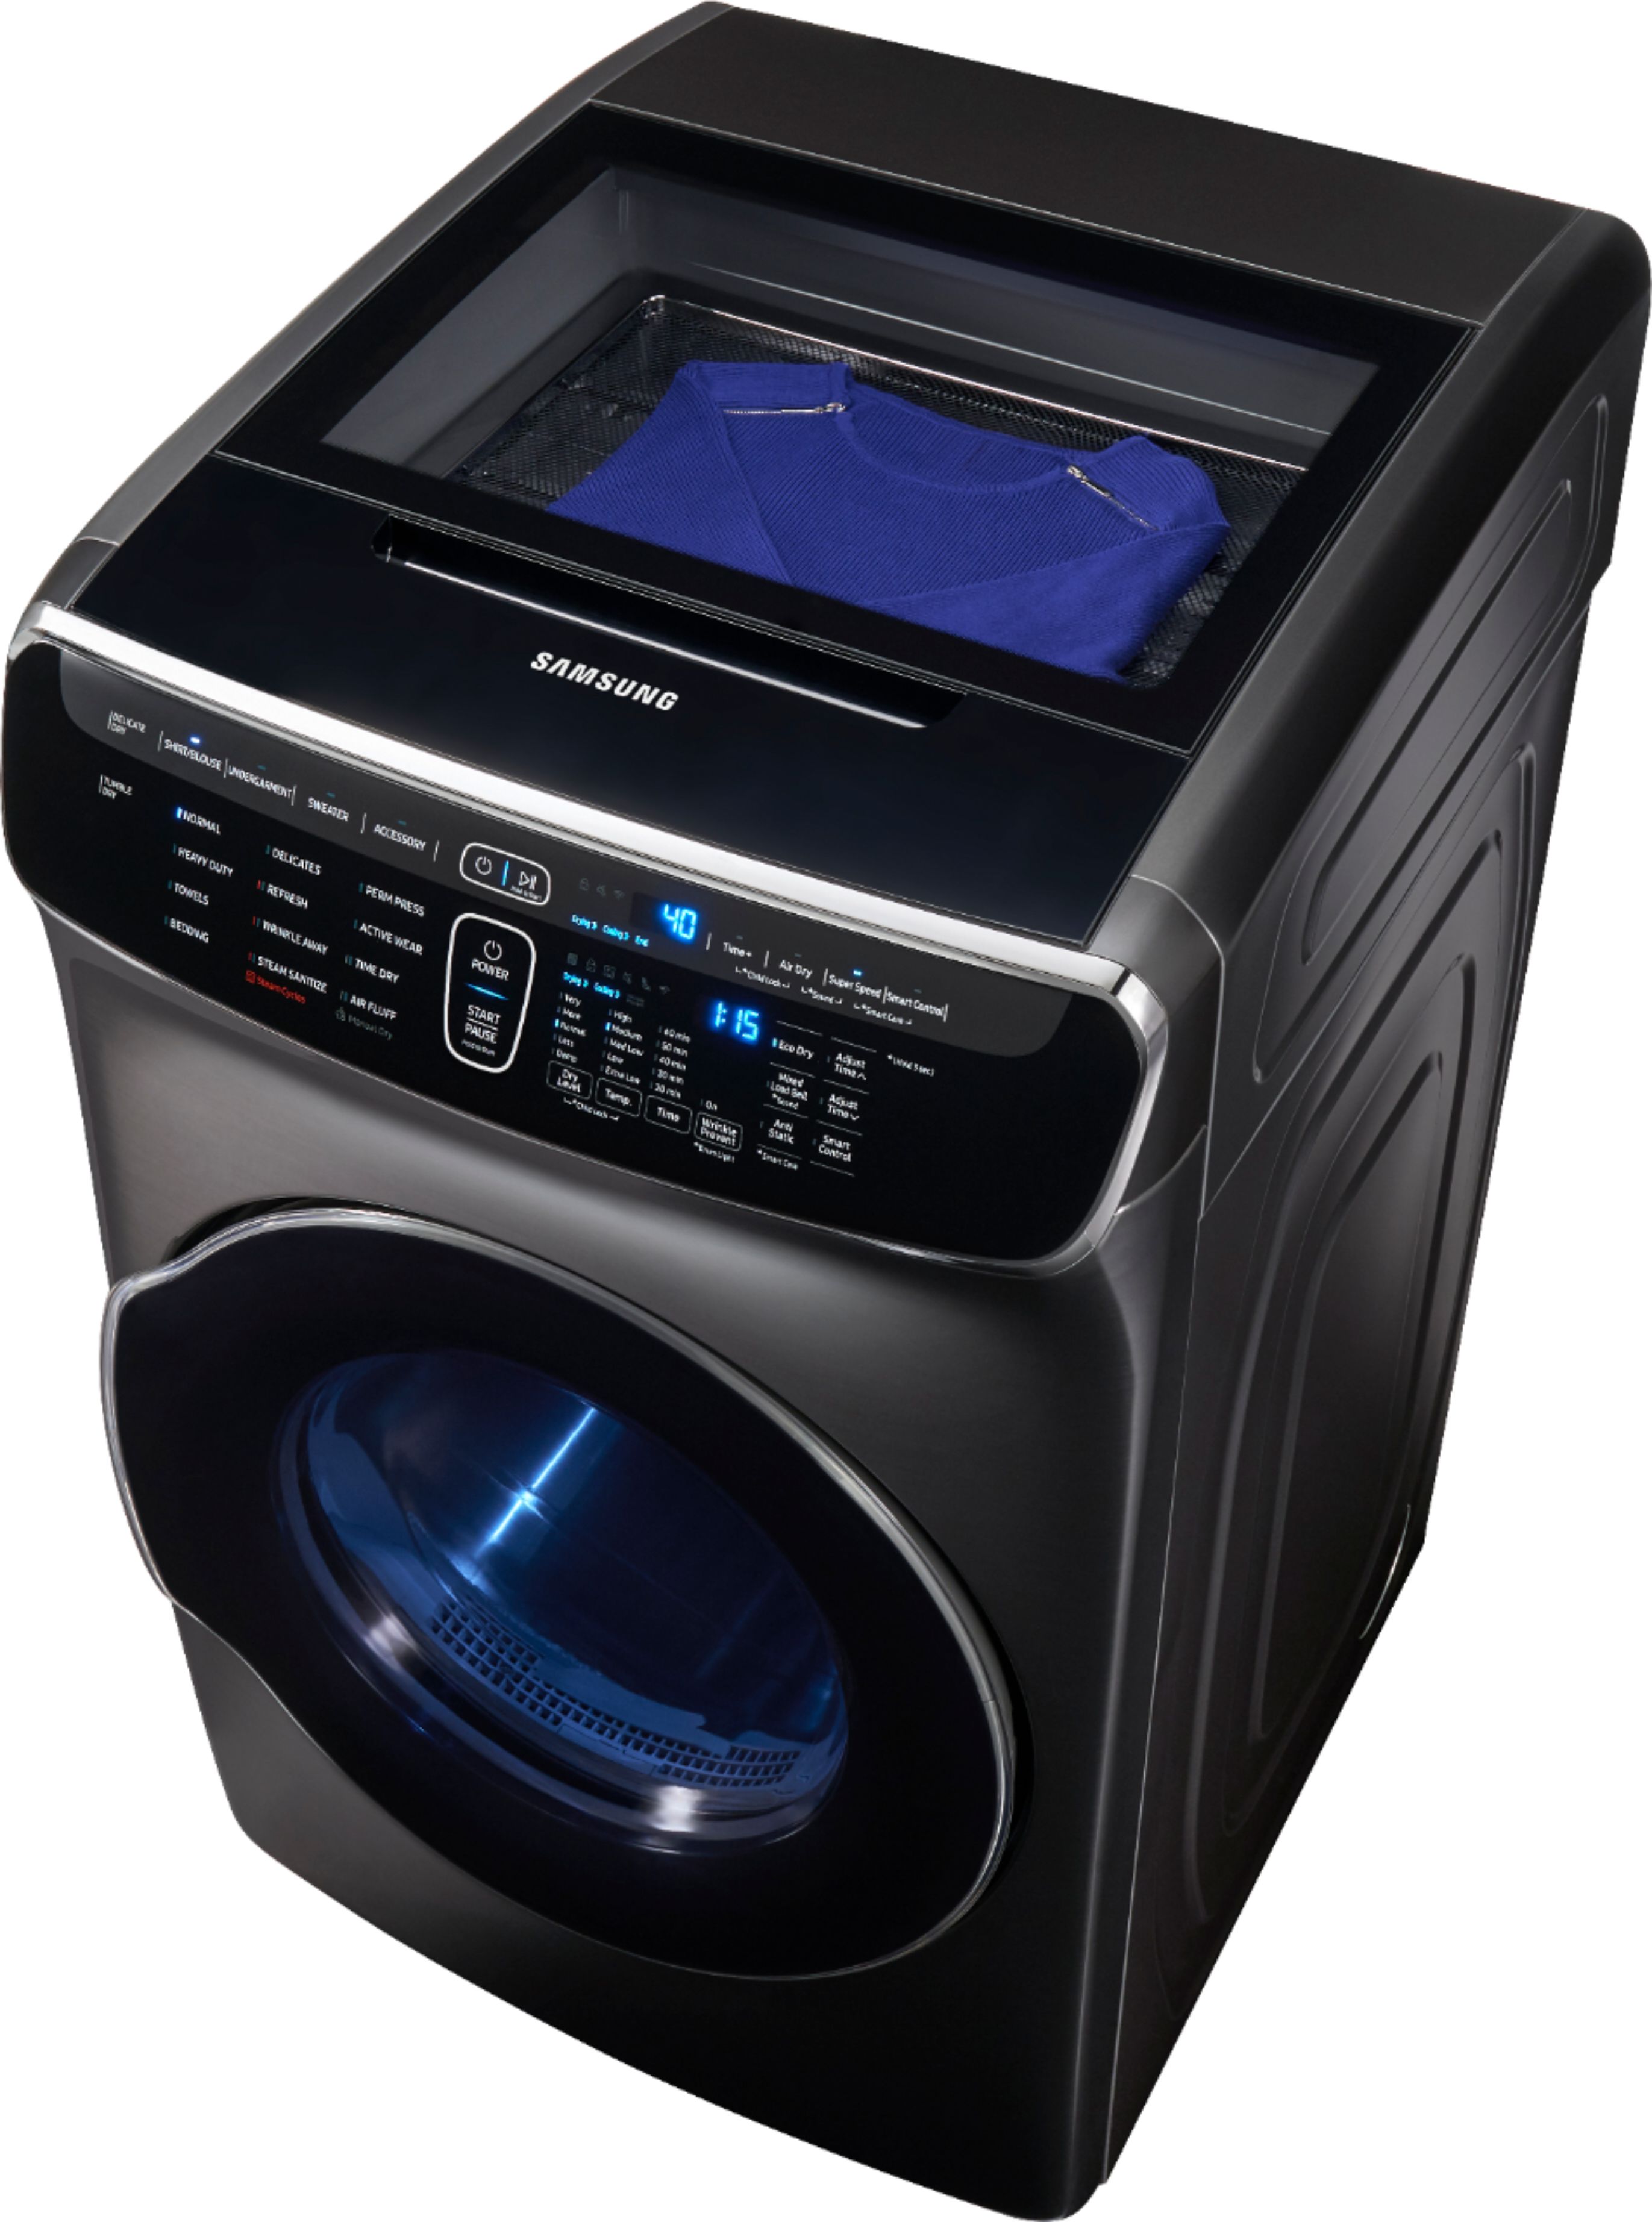 samsung-7-5-cu-ft-gas-dryer-with-steam-and-flexdry-fingerprint